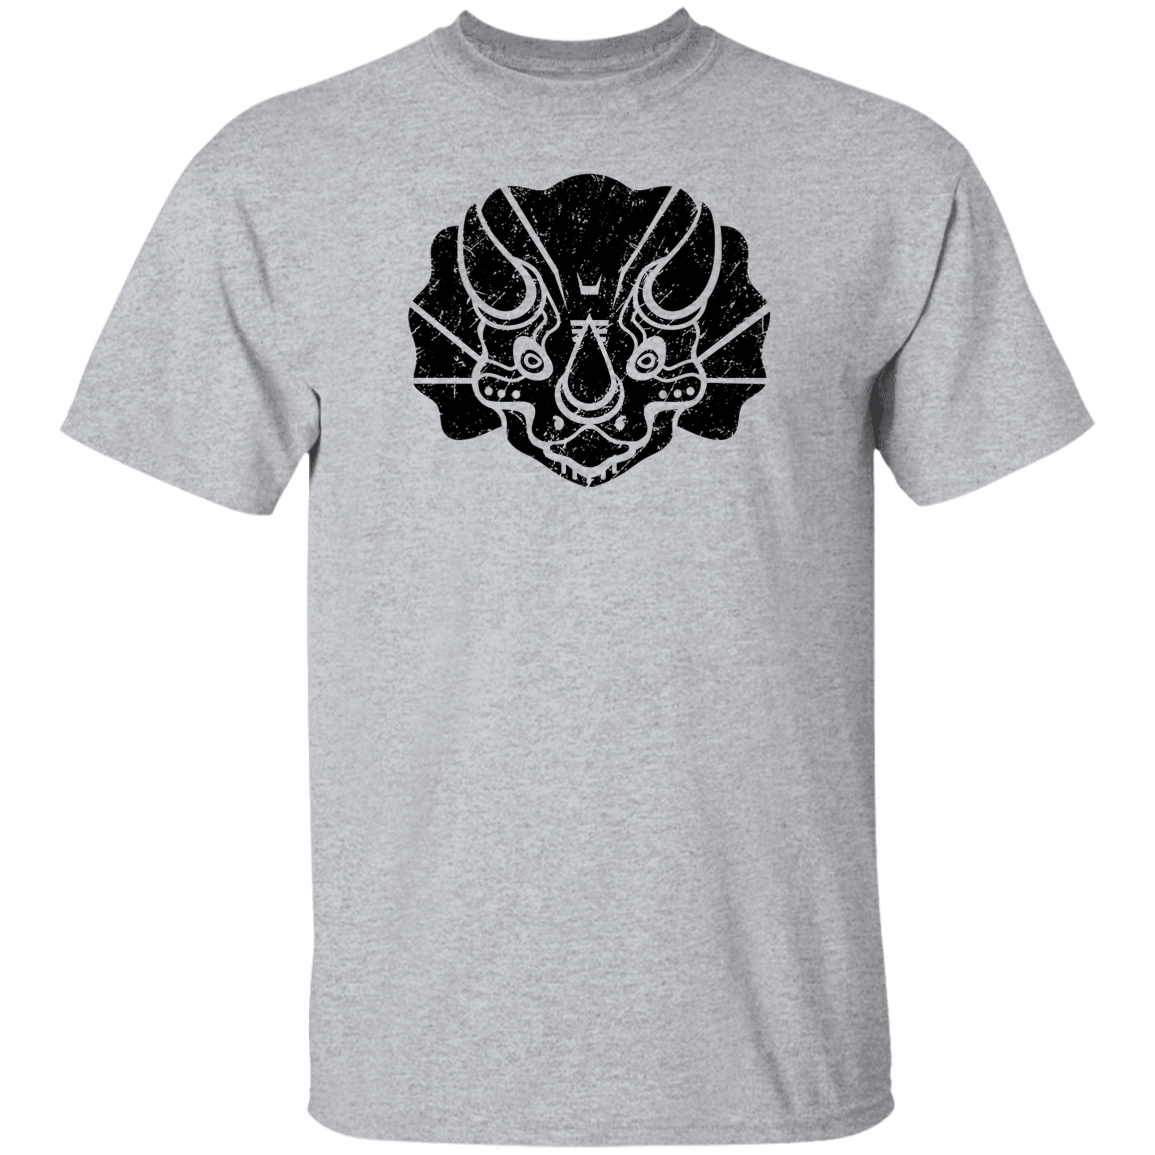 Black Distressed Emblem T-Shirt for Kids (Triceratops/Trips)